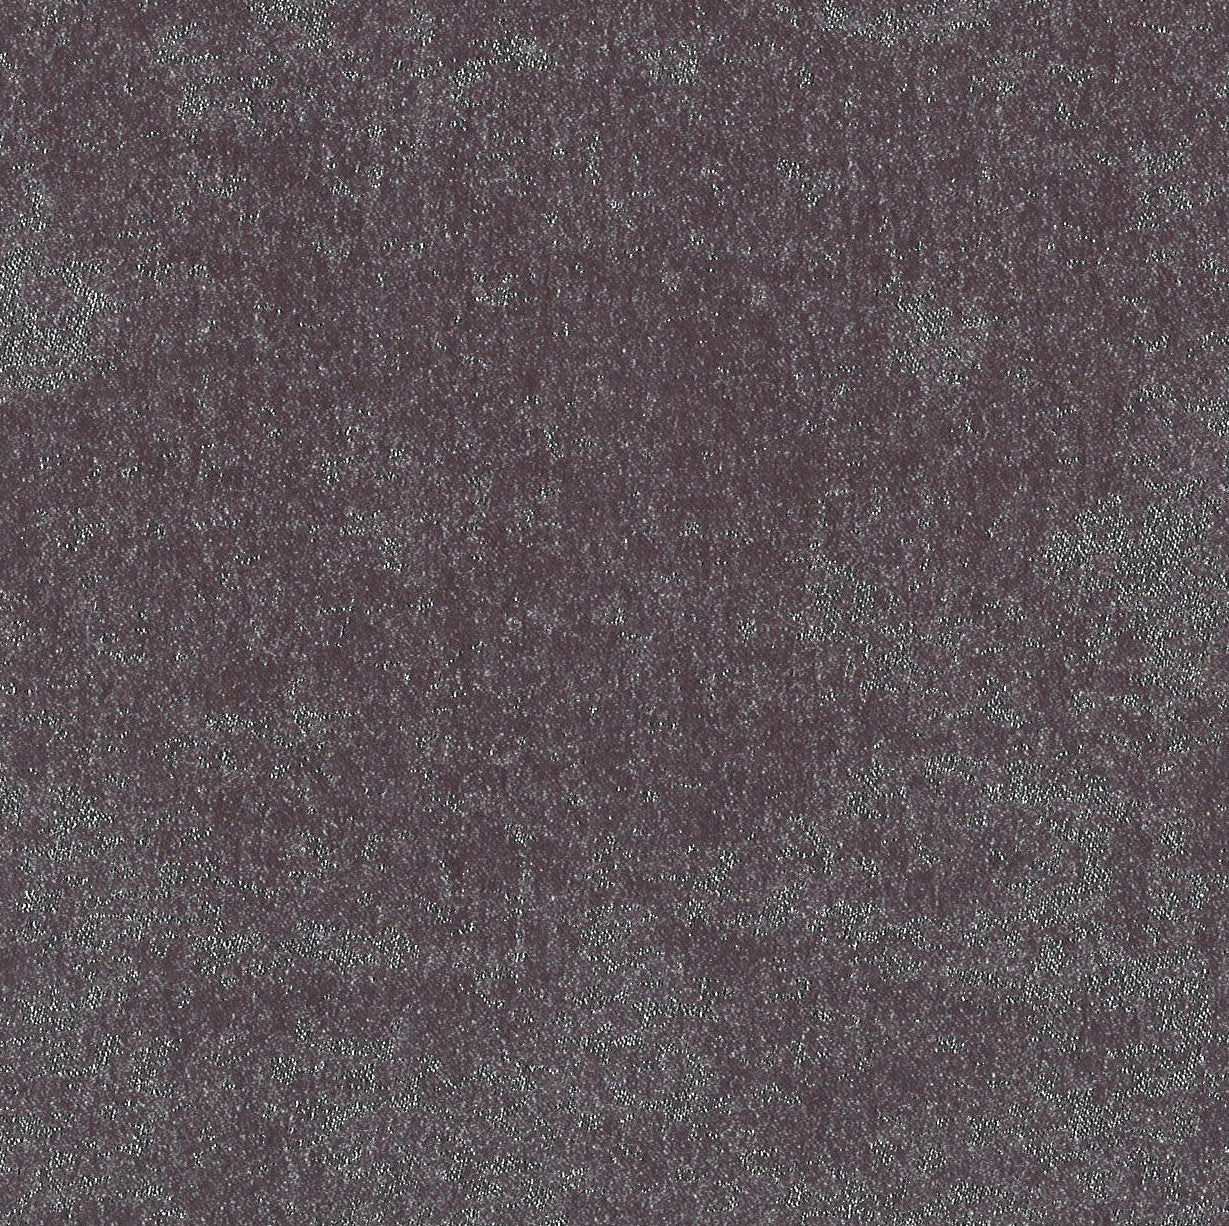 38008-05 Dark Purple, Silver Polyester Foil Washed 100% foil polyester purple silver stretch washed woven Foil - knit fabric - woven fabric - fabric company - fabric wholesale - fabric b2b - fabric factory - high quality fabric - hong kong fabric - fabric hk - acetate fabric - cotton fabric - linen fabric - metallic fabric - nylon fabric - polyester fabric - spandex fabric - chun wing hing - cwh hk - fabric worldwide ship - 針織布 - 梳織布 - 布料公司- 布料批發 - 香港布料 - 秦榮興